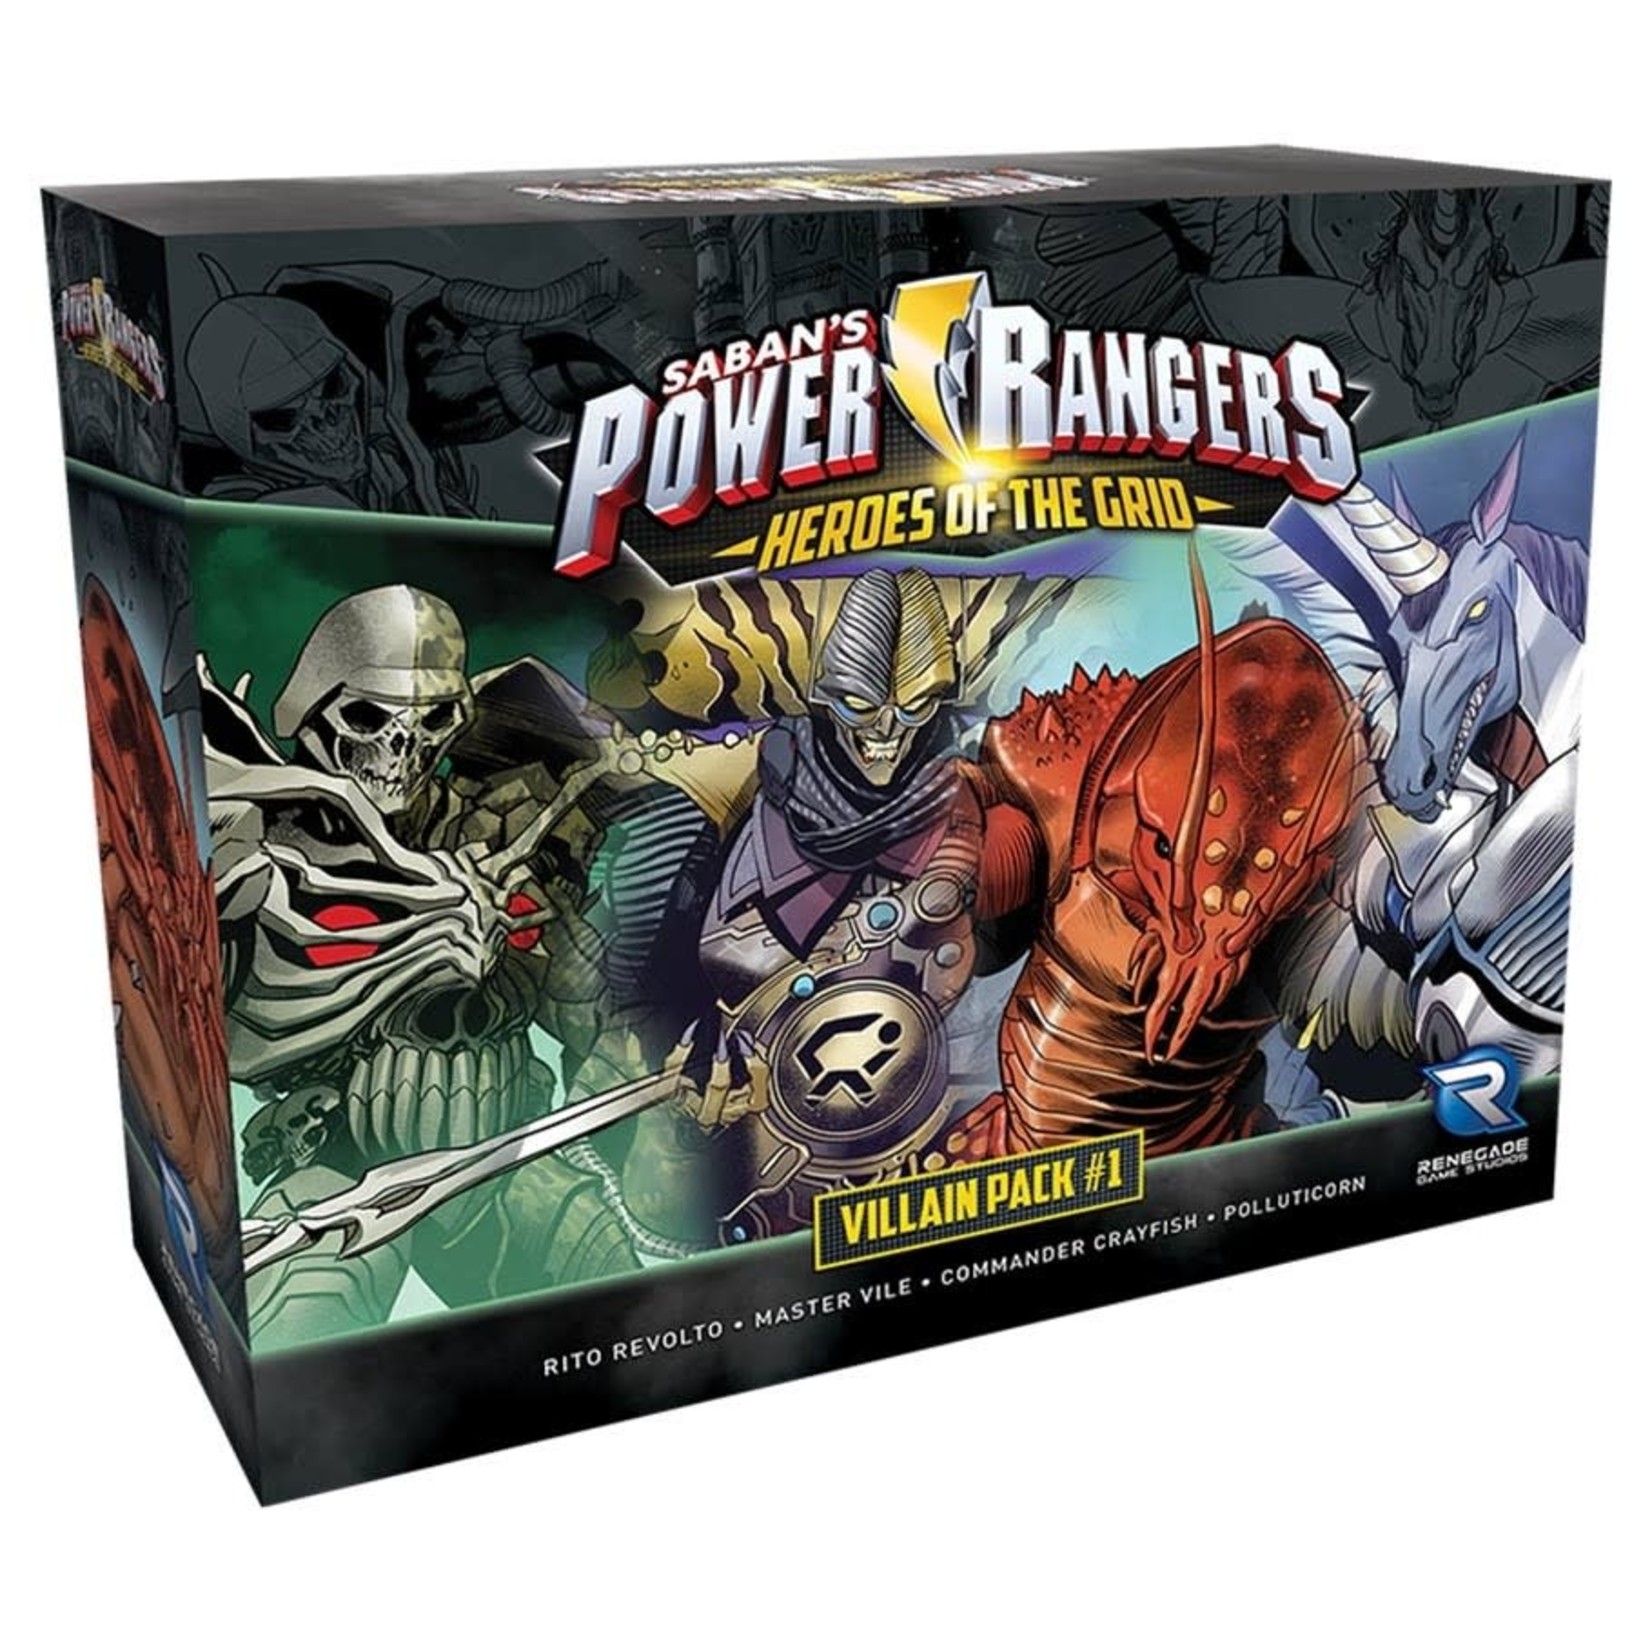 Renegade Power Rangers: Heroes of the Grid - Villain Pack #1